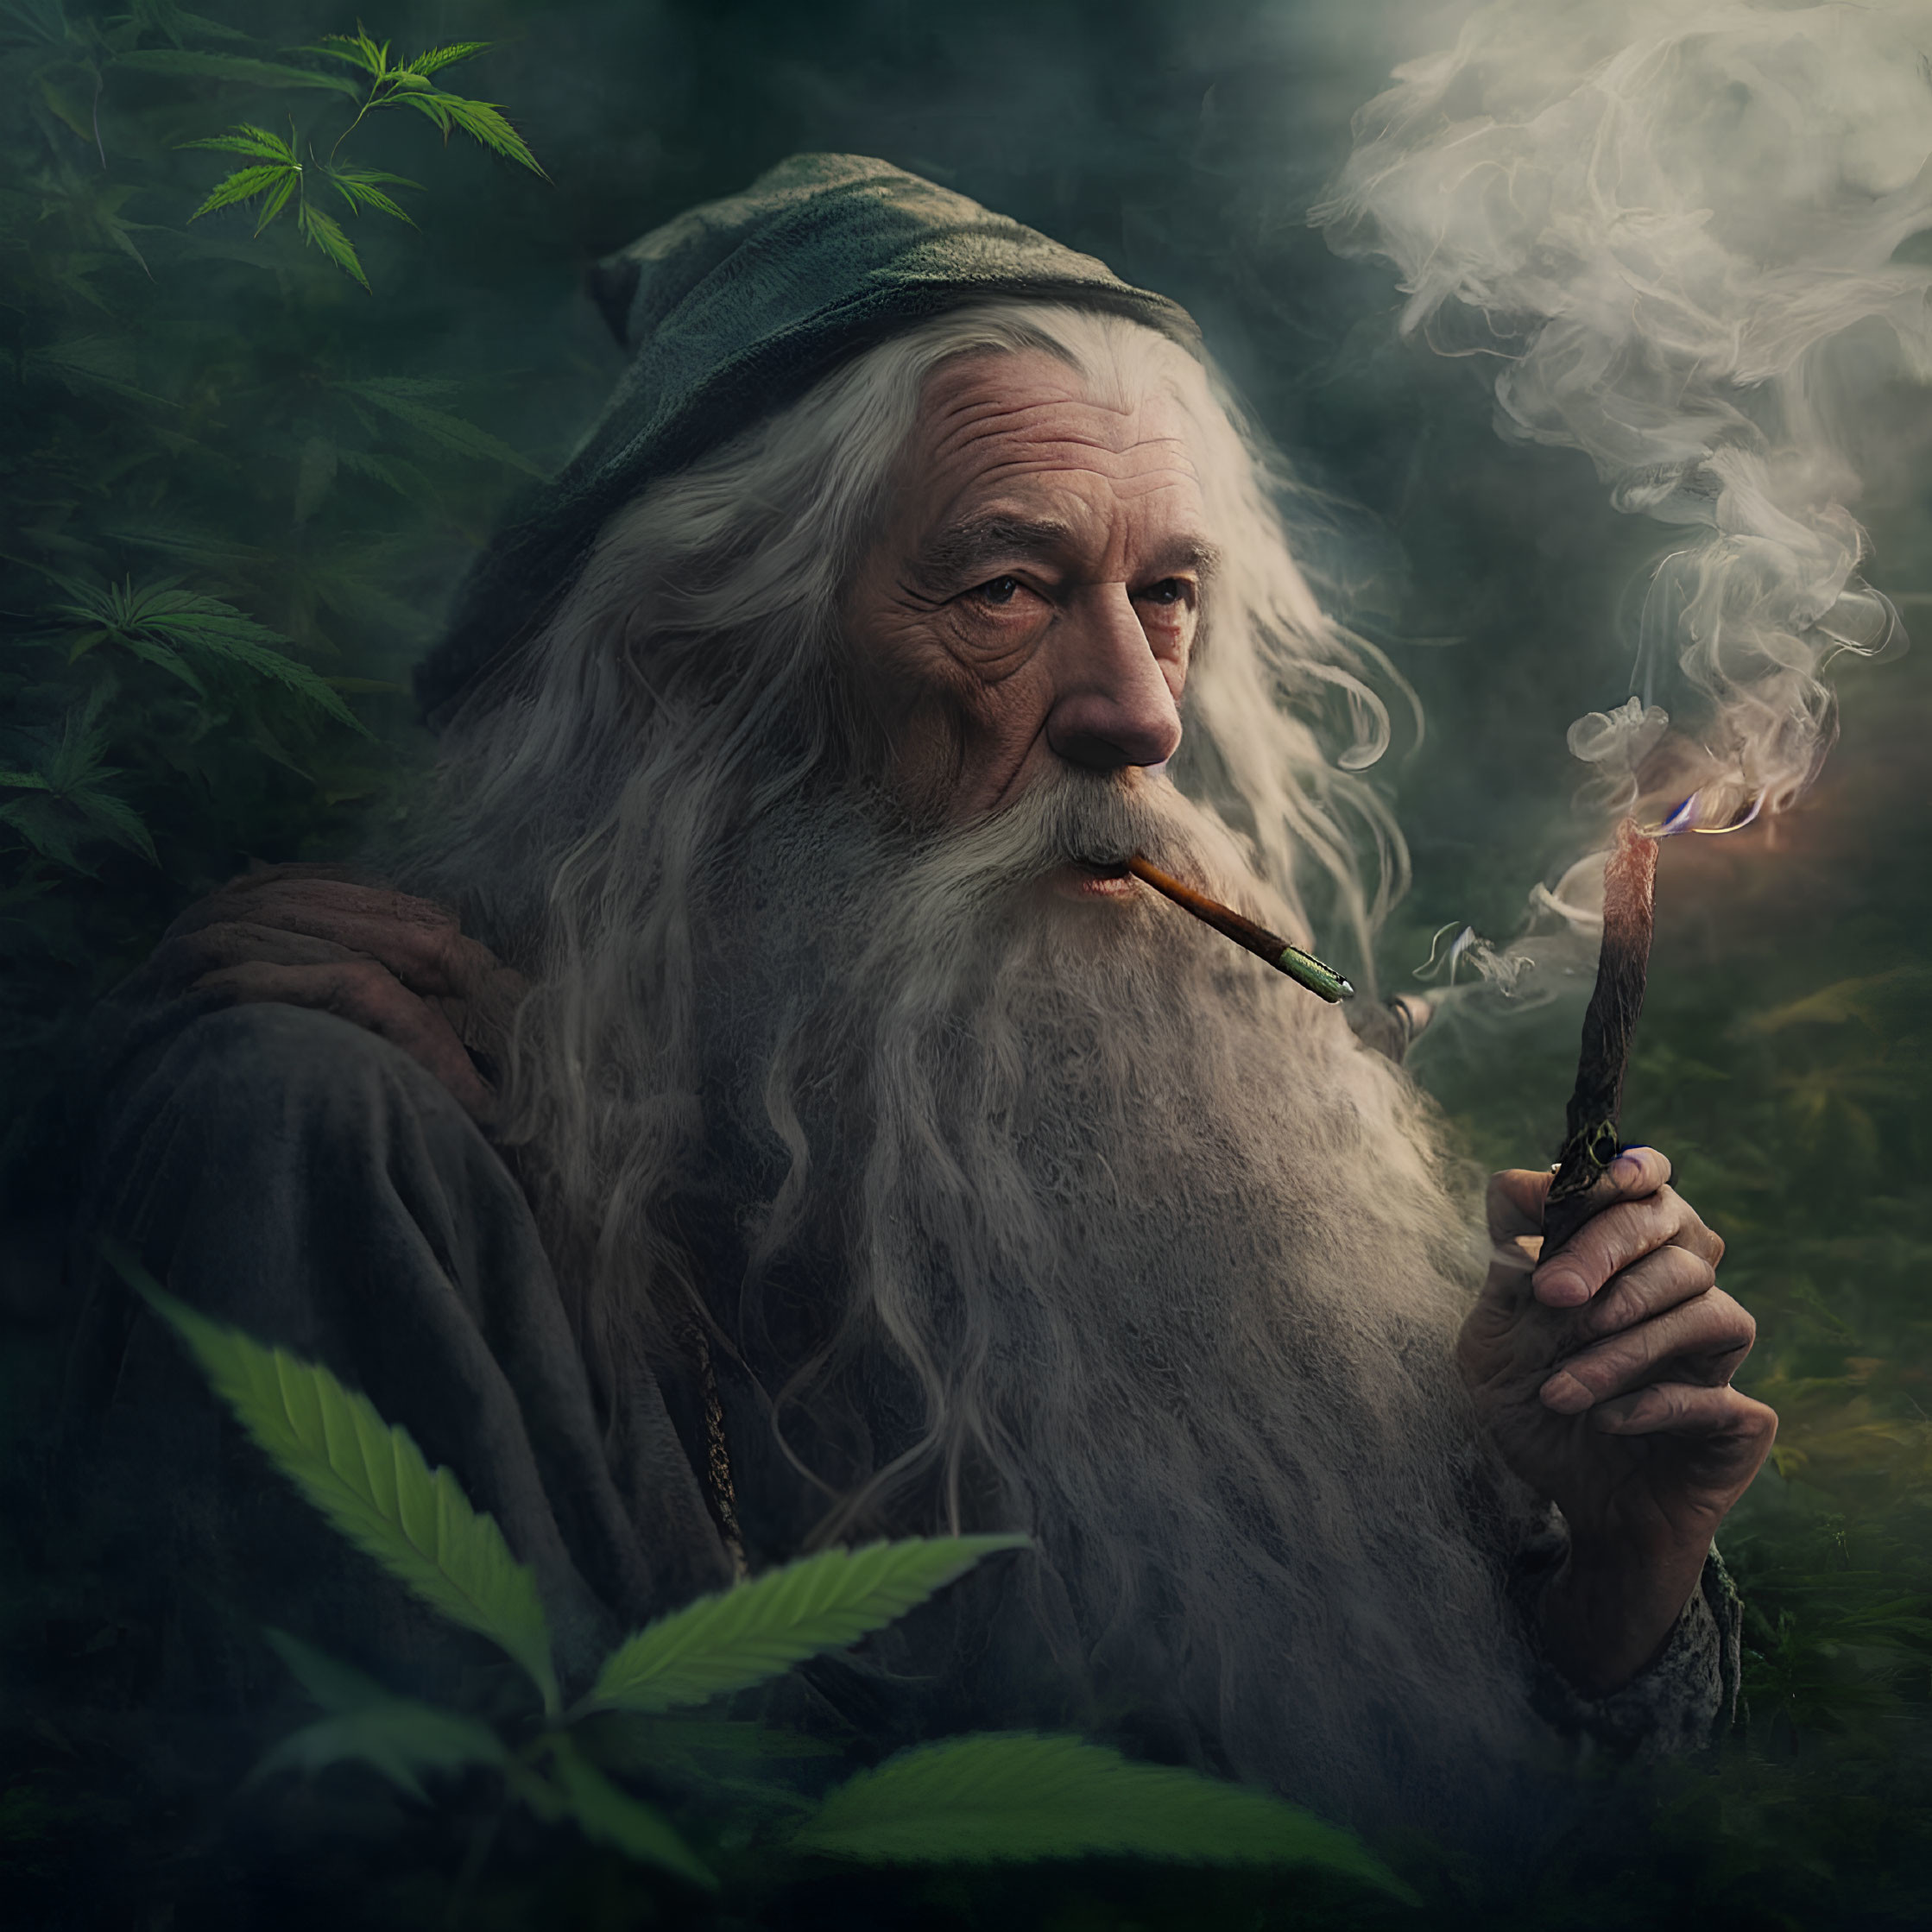 Elderly man with long white beard in green hat smoking pipe in misty setting